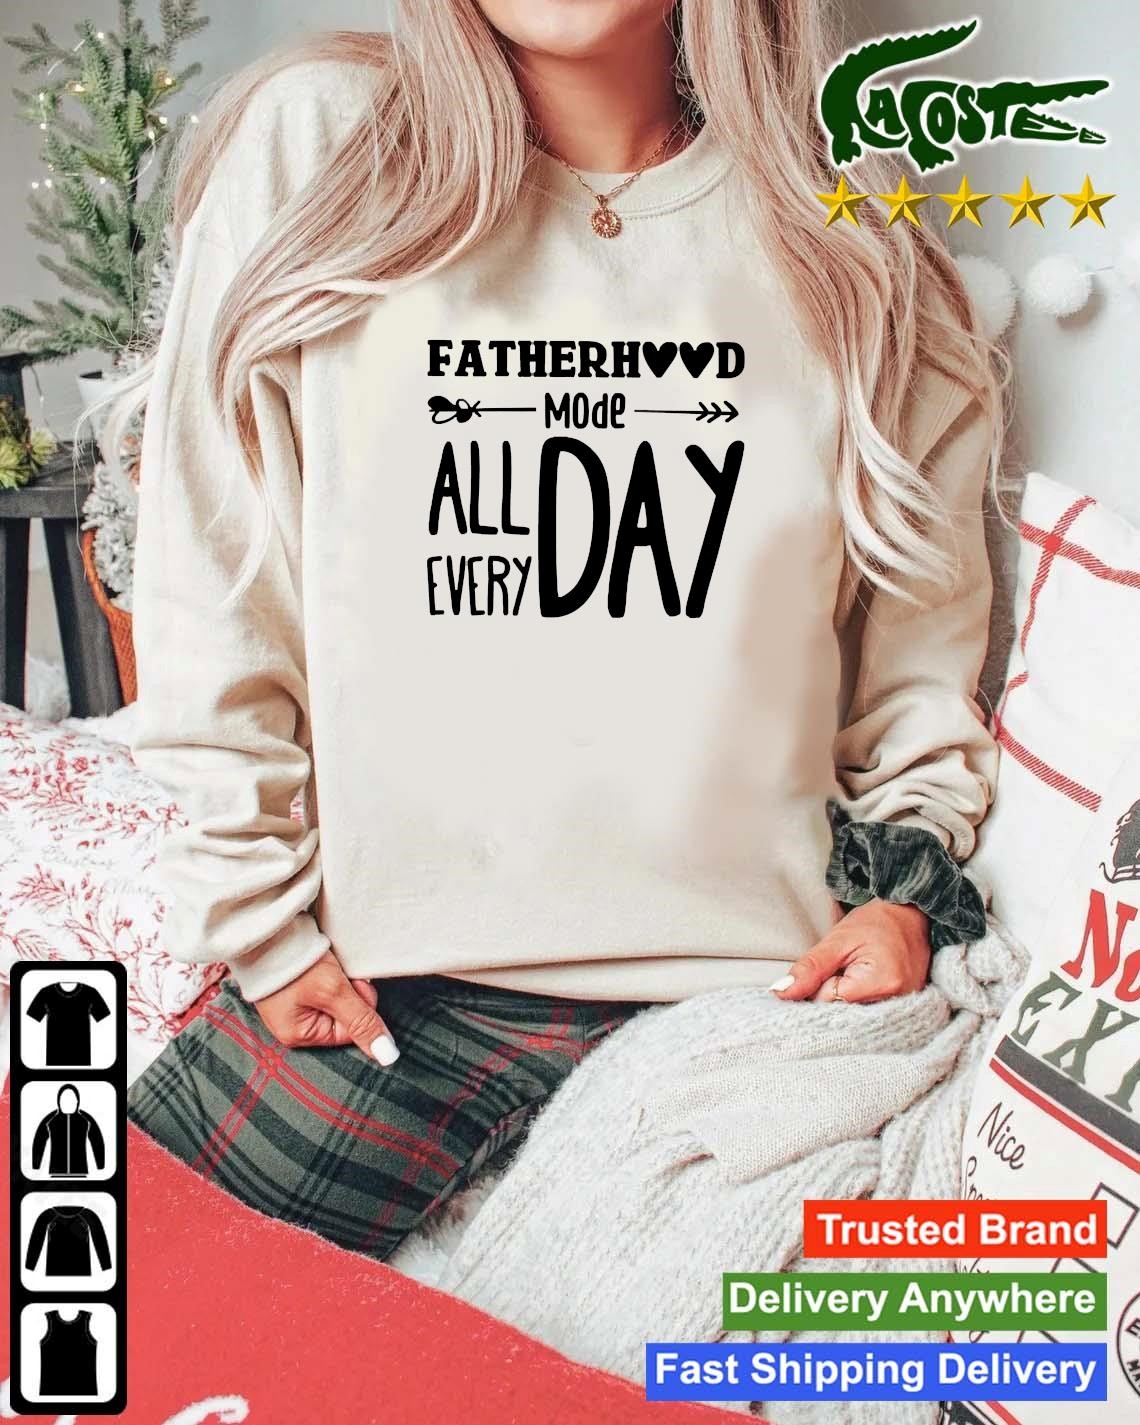 Fatherhood All Day Every Day Sweatshirt Mockup Sweater.jpg